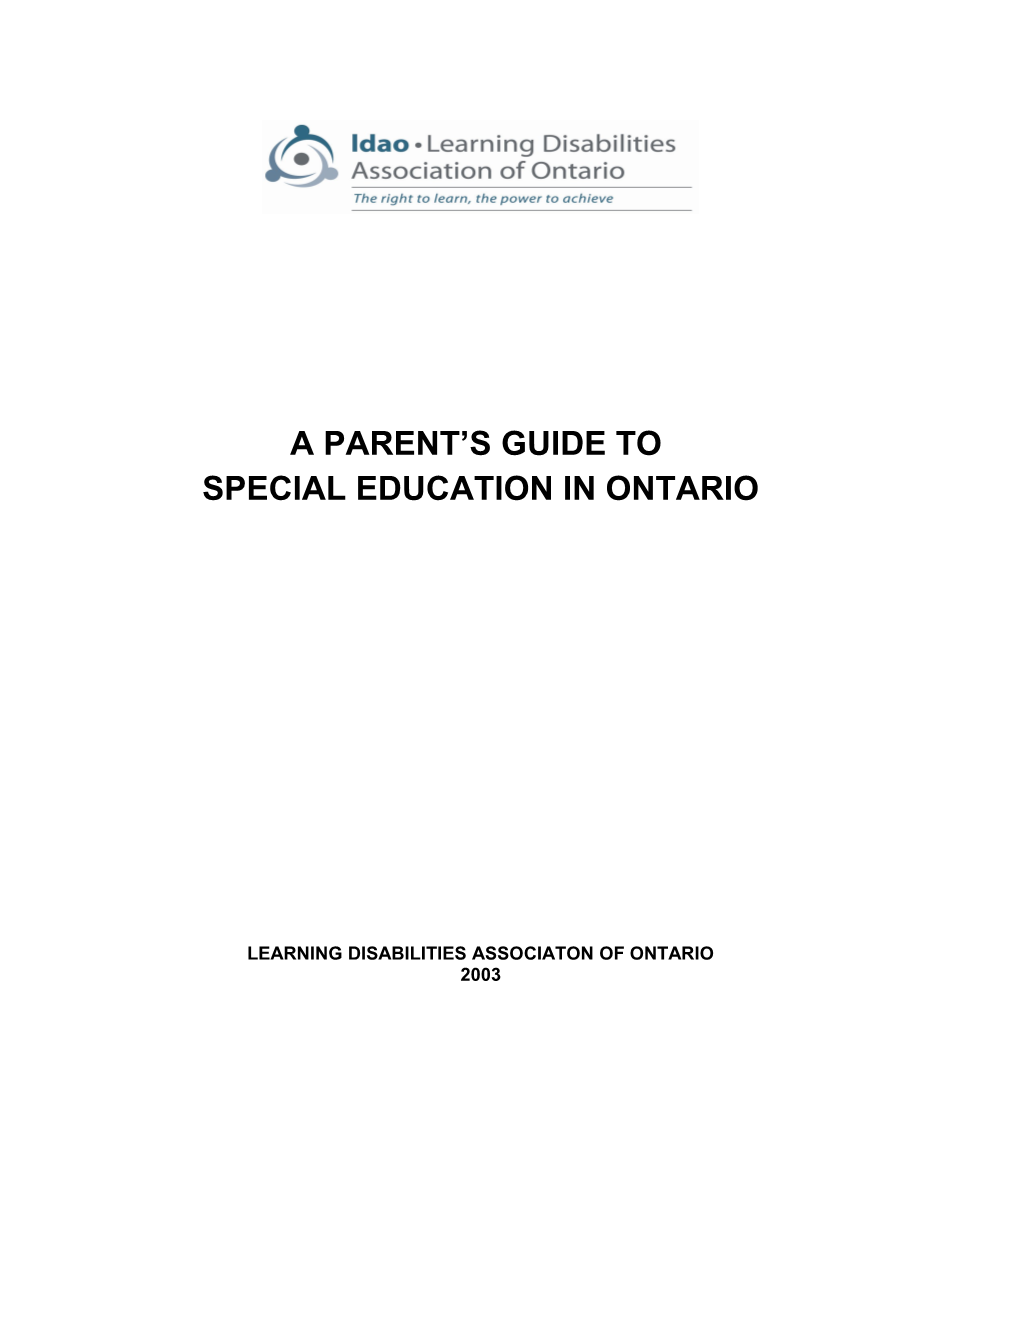 Learning Disabilities Associaton of Ontario